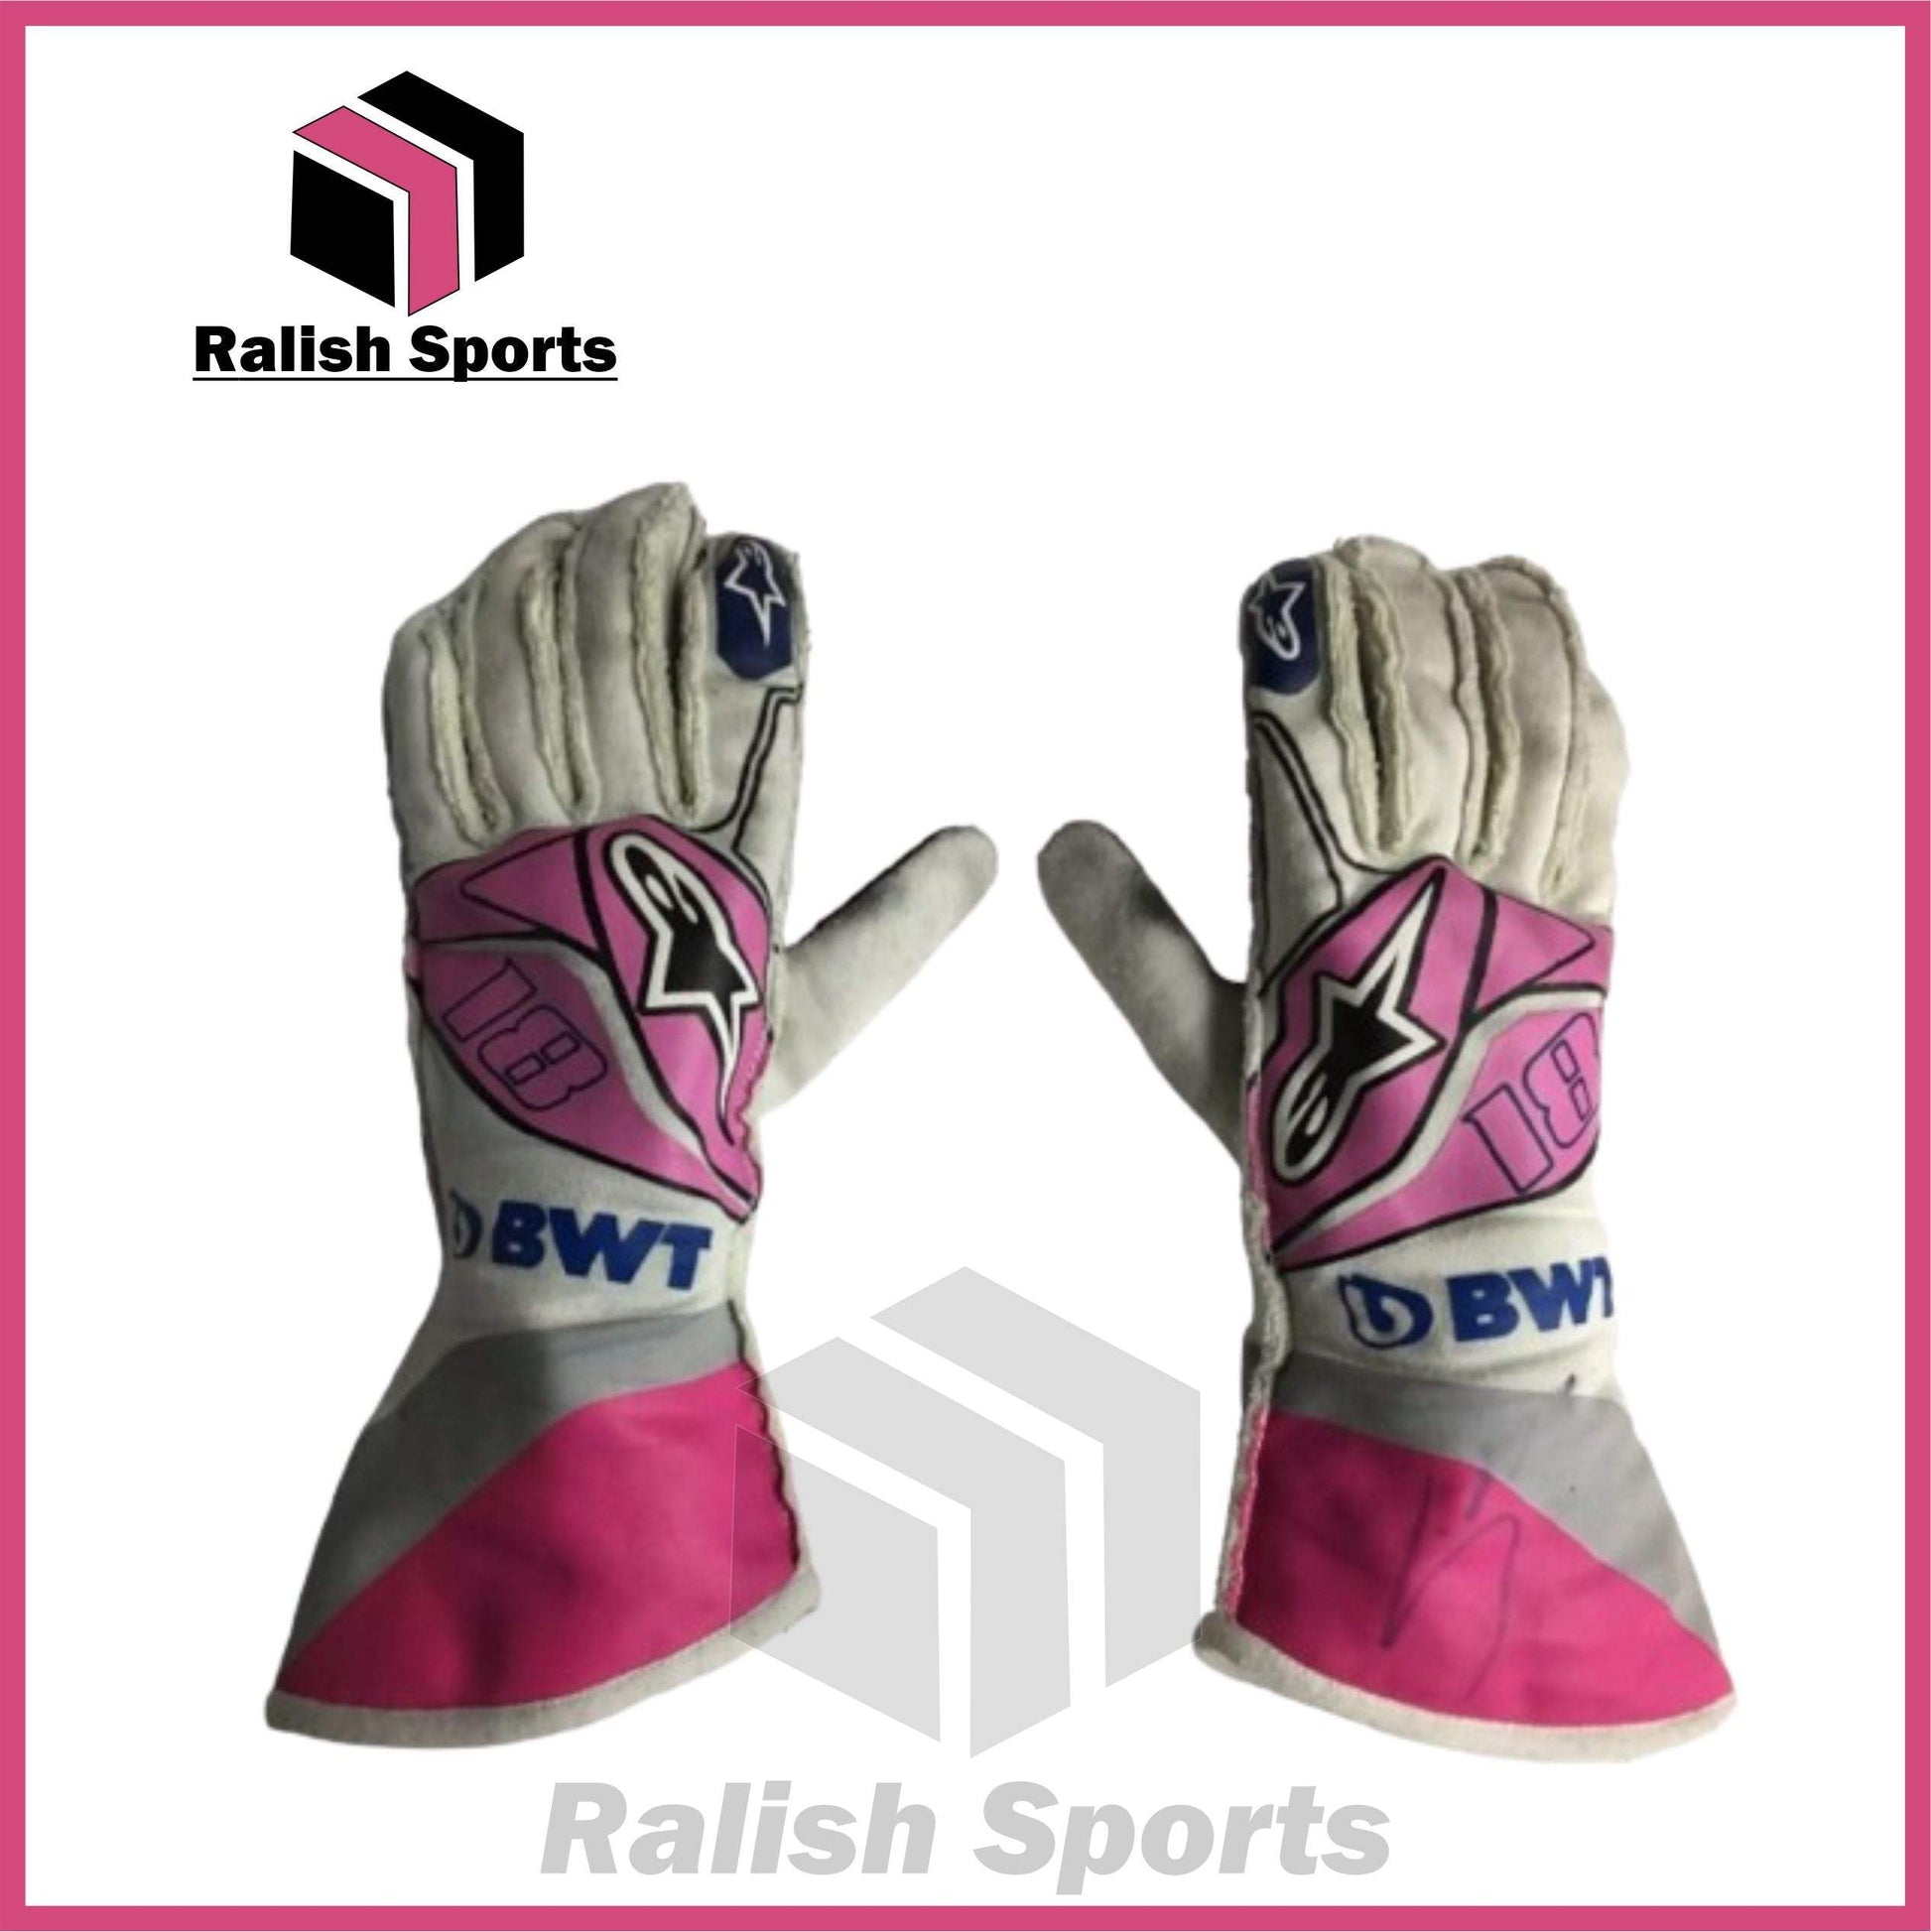 Lance Stroll 2020 Gloves - Ralish Sports